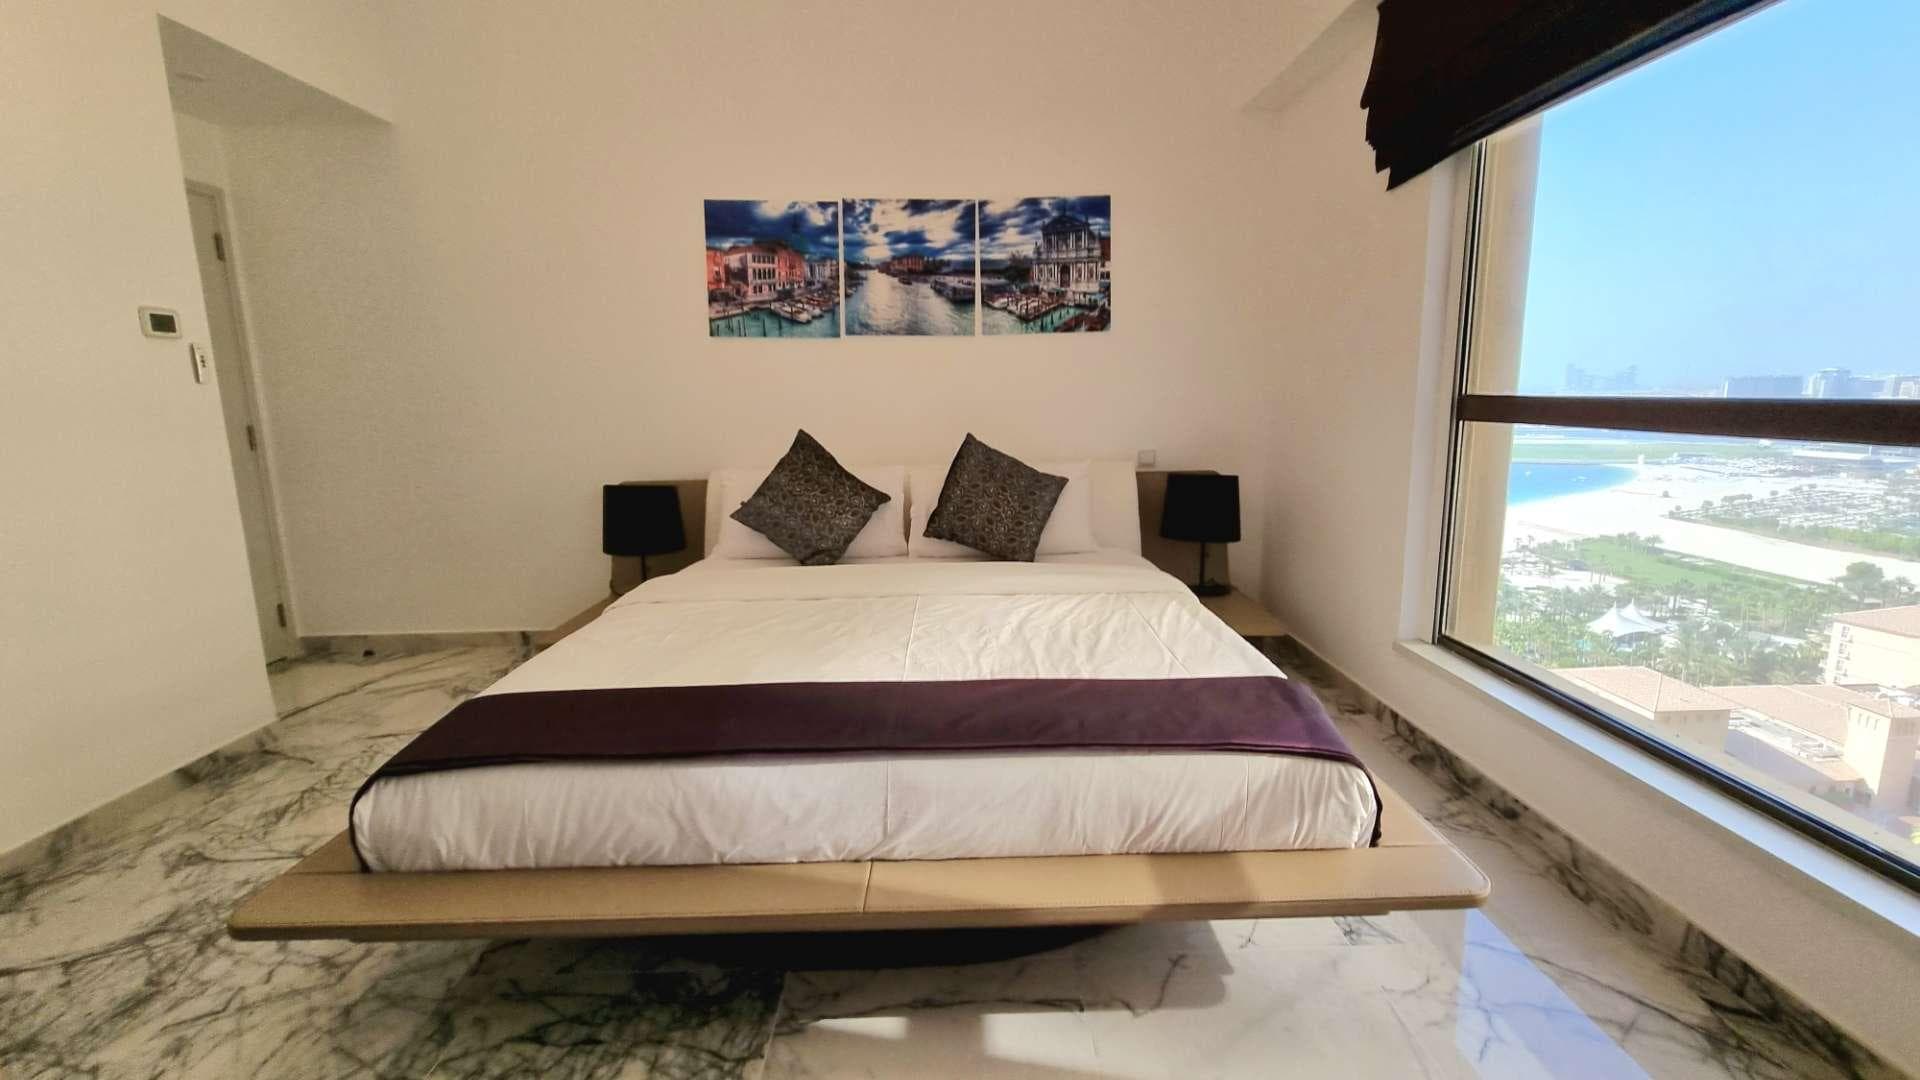 3 Bedroom Apartment For Rent Sadaf Lp32640 2d660abce9445200.jpg